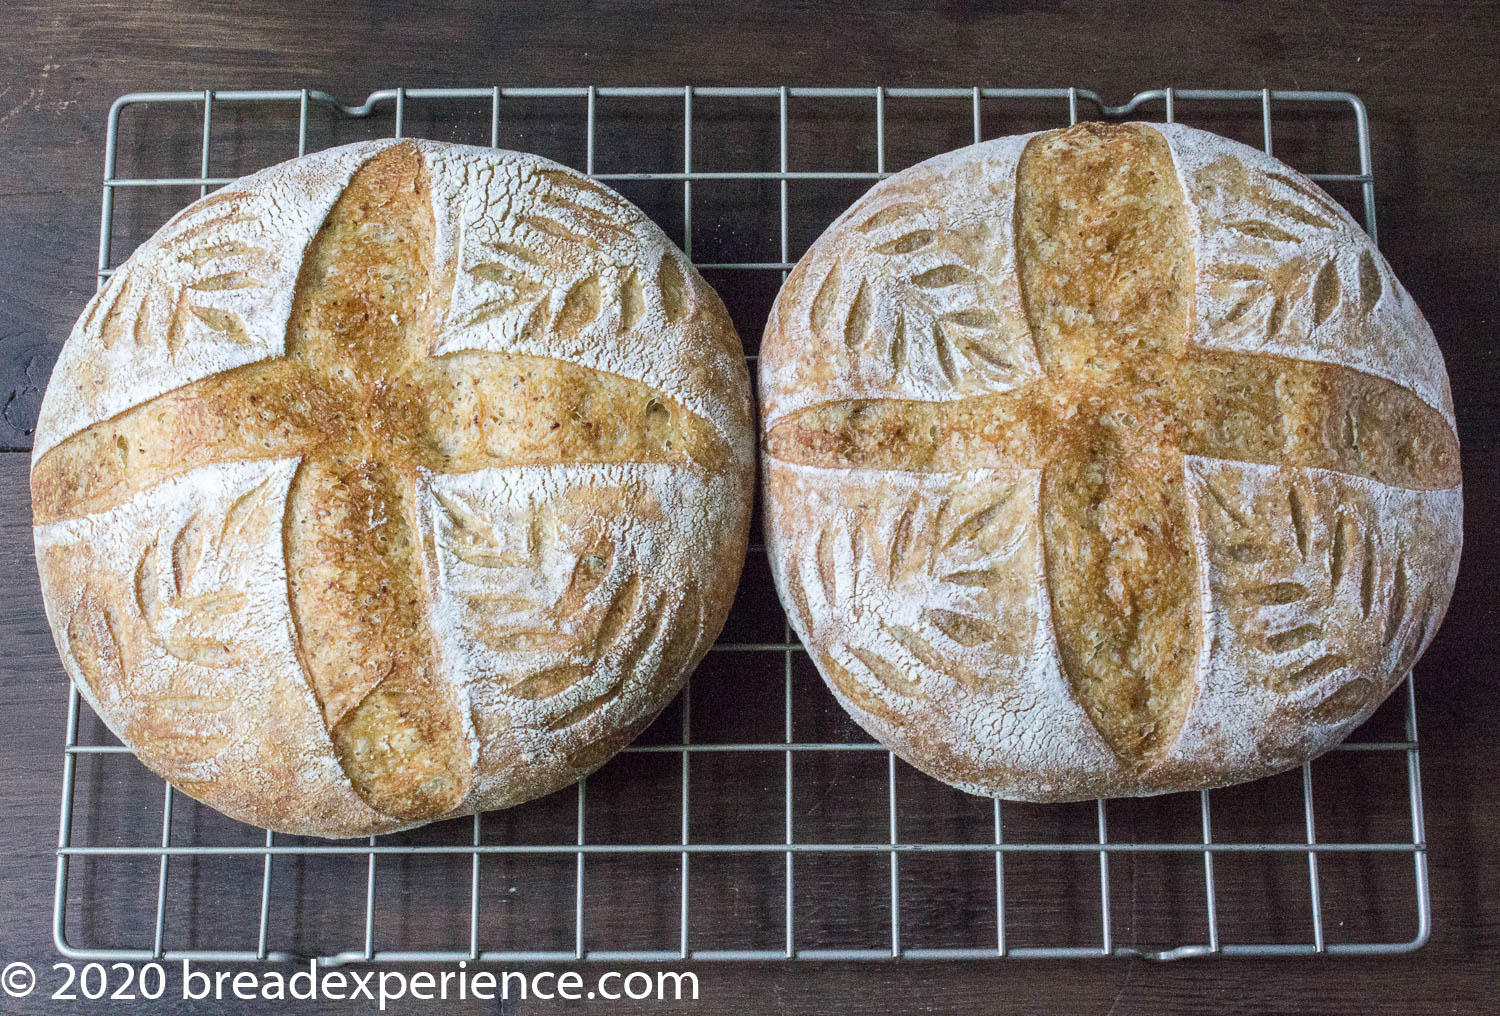 Decorative scoring on round loaves